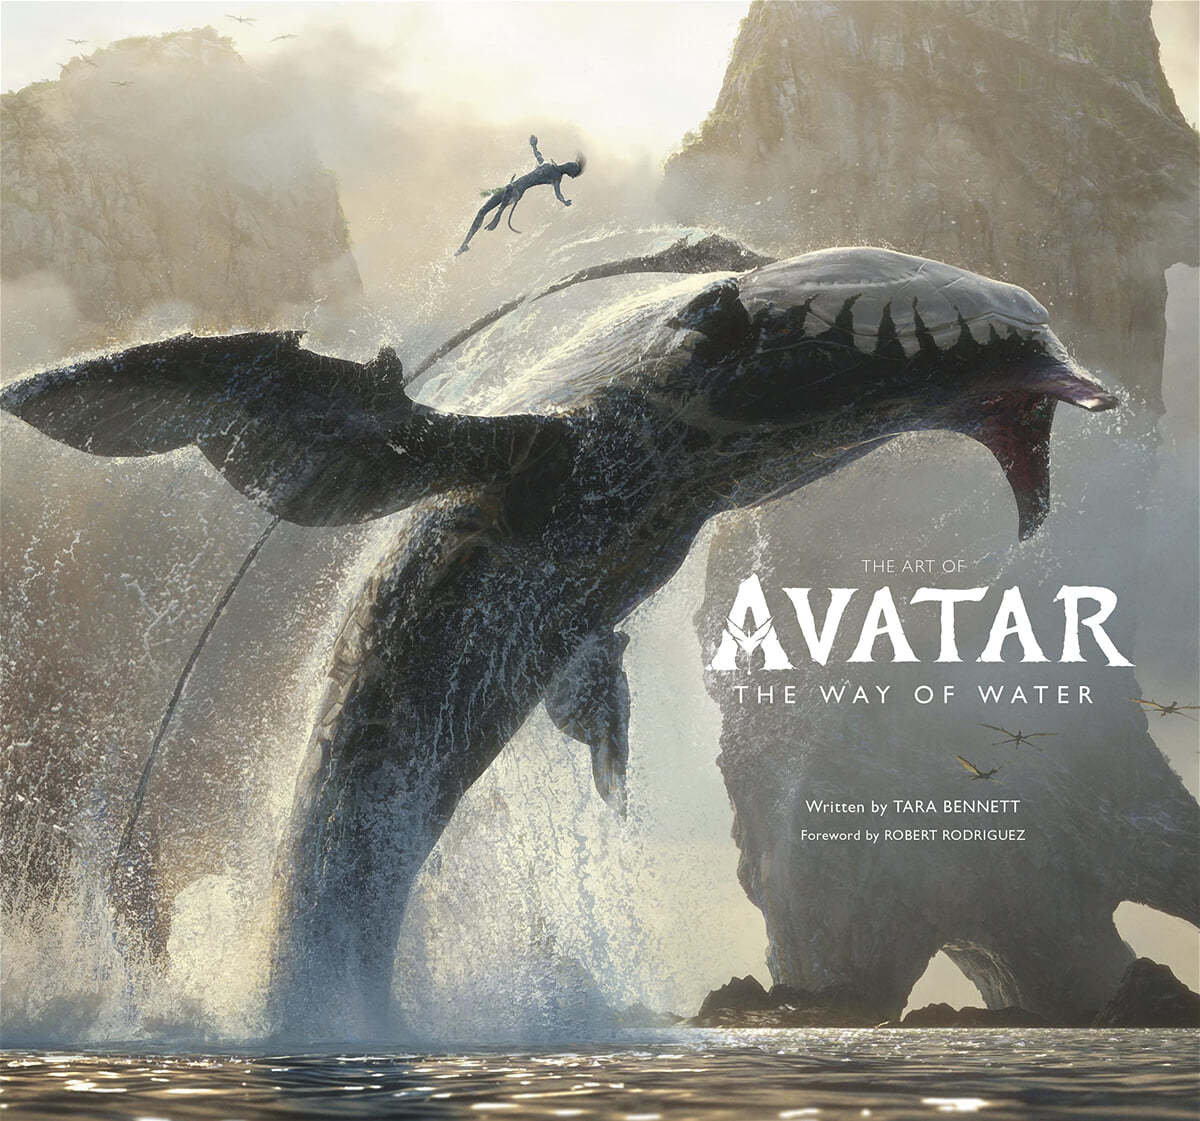 The Art of Avatar the Way of Water : 영화 아바타 2 물의 길 아트북 (미국판)